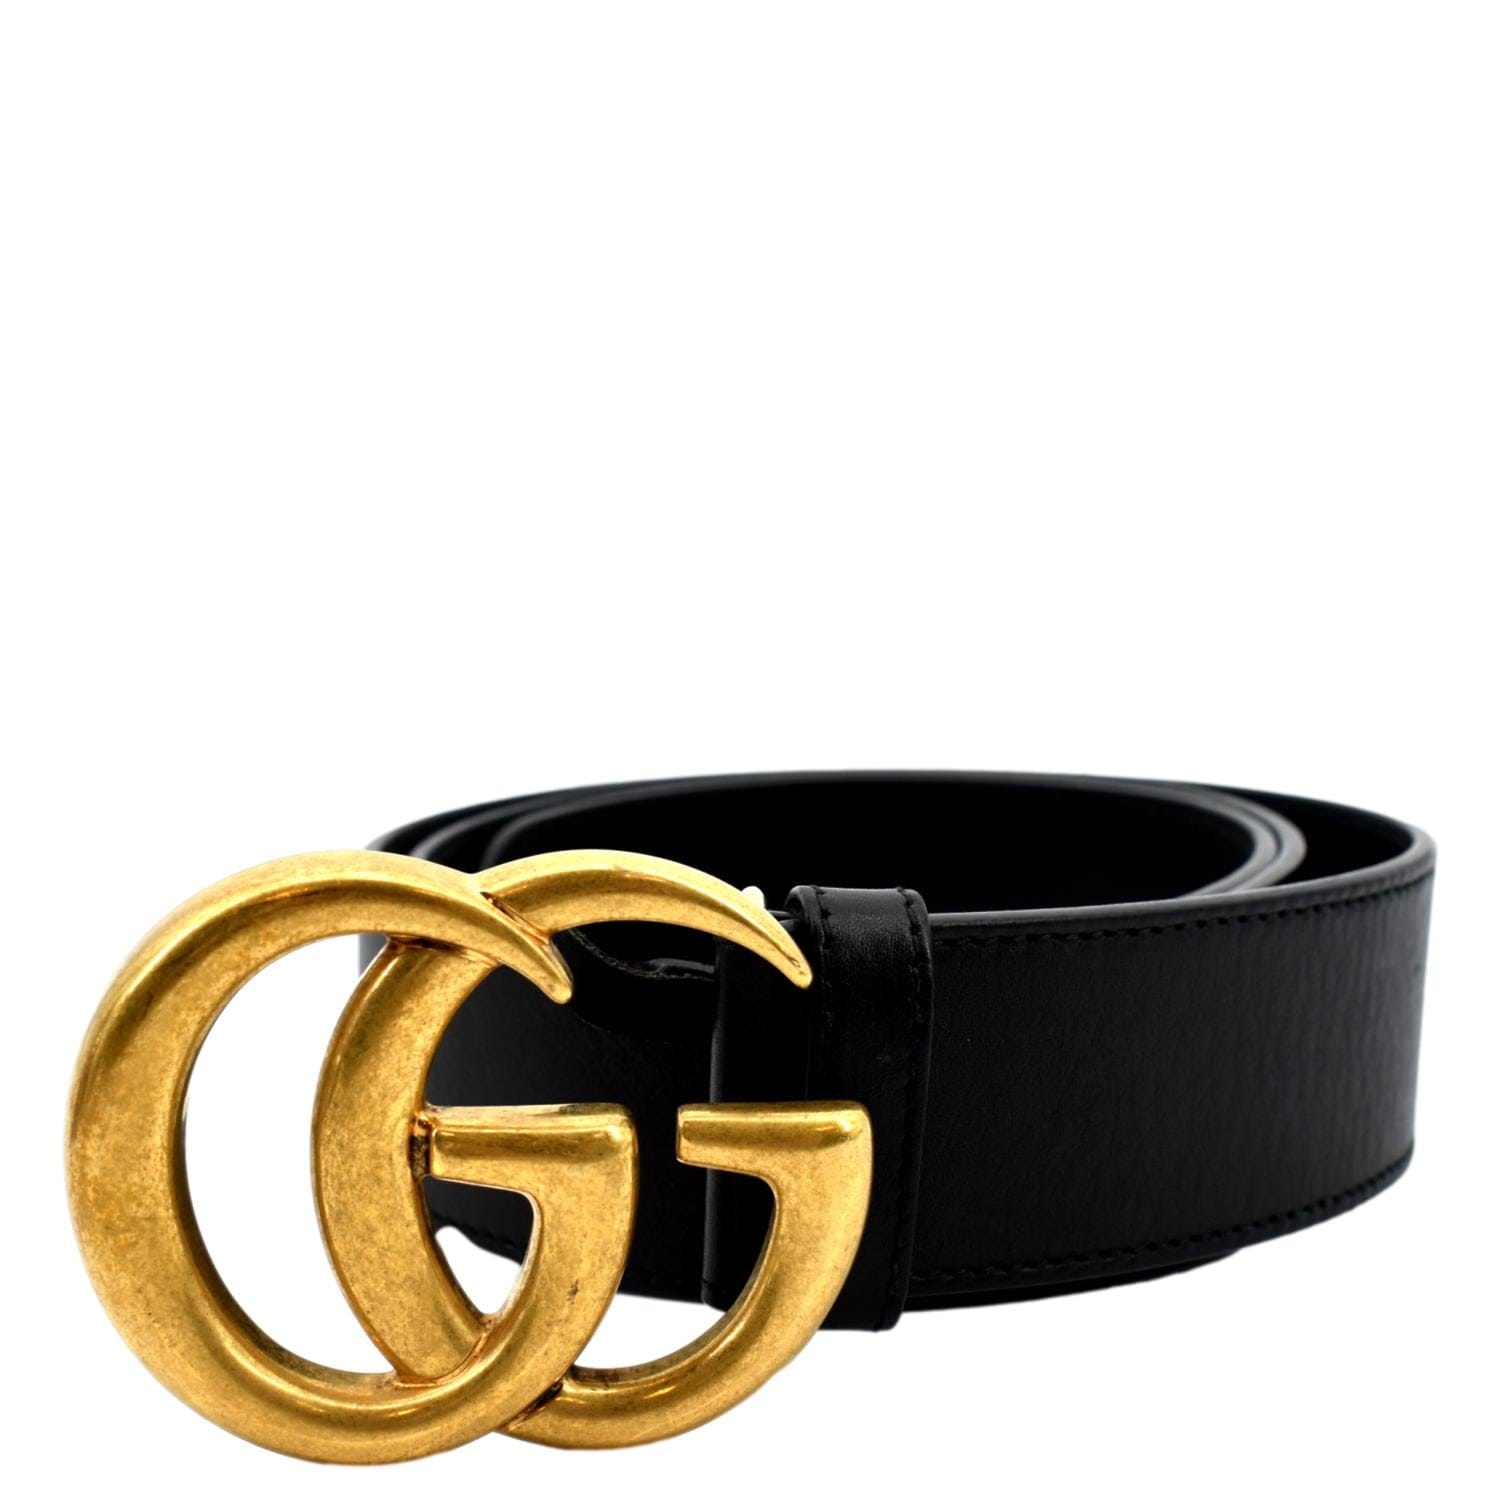 Gucci Double G Buckle Leather Belt Size 90.36 Black 400593